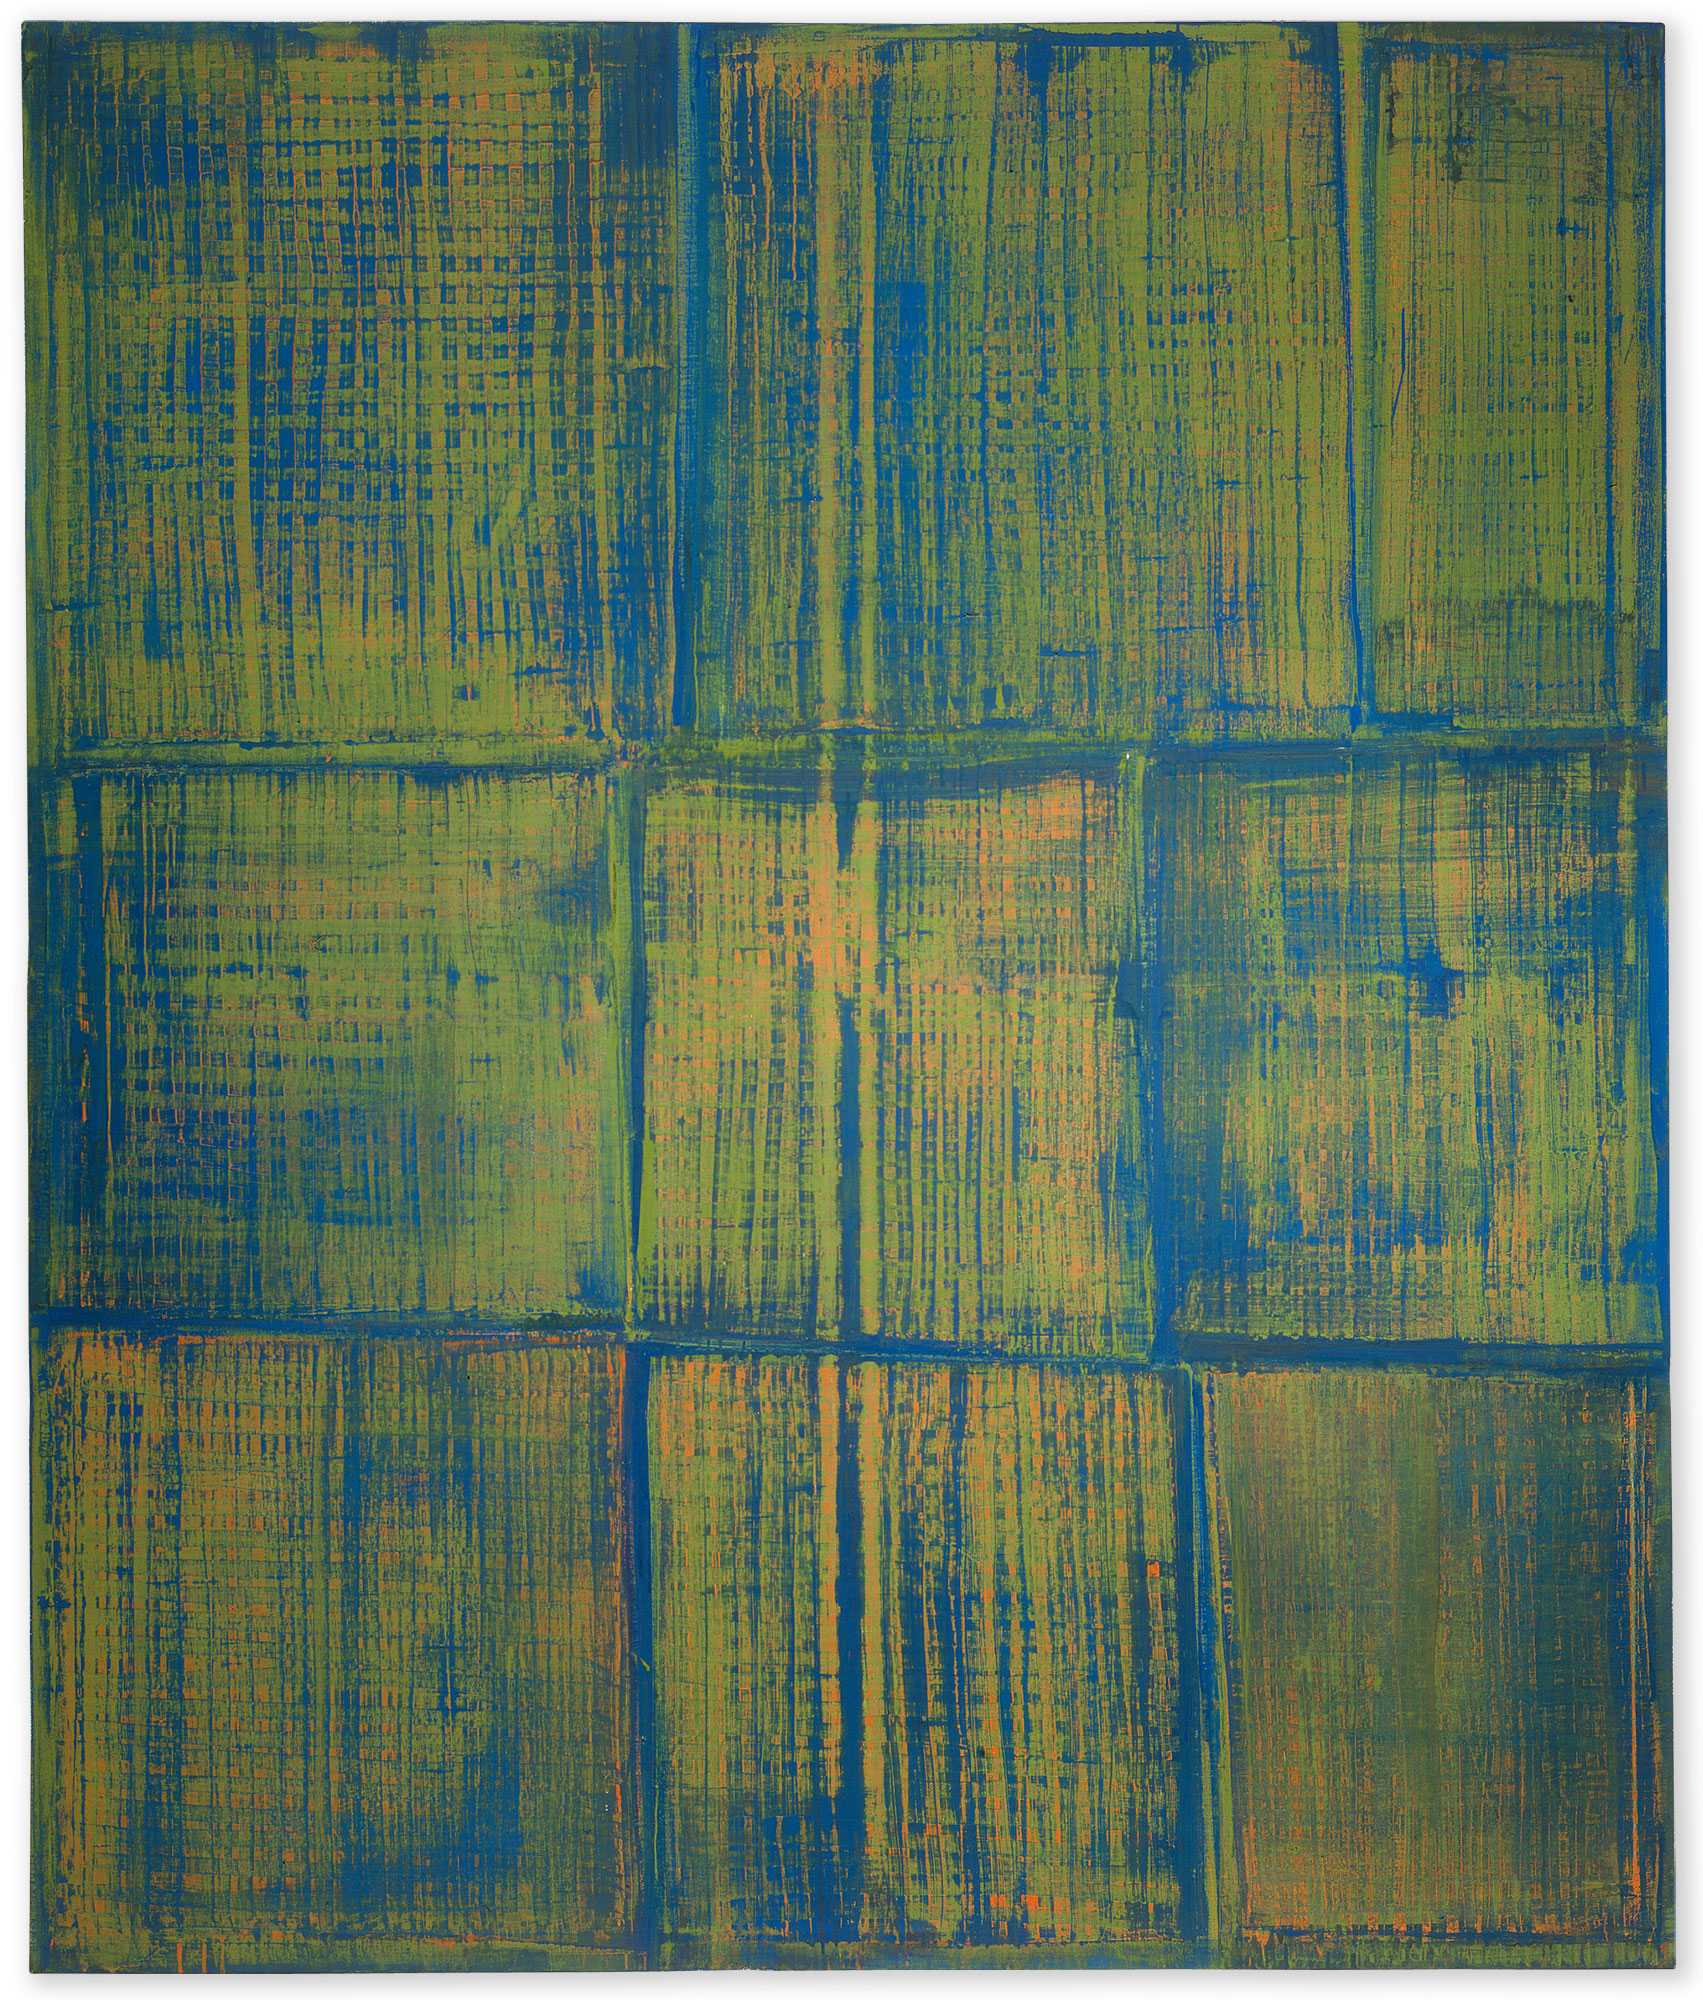 MALIGCONG VII / 1994 · egg tempera on canvas · 190 x 160 cm